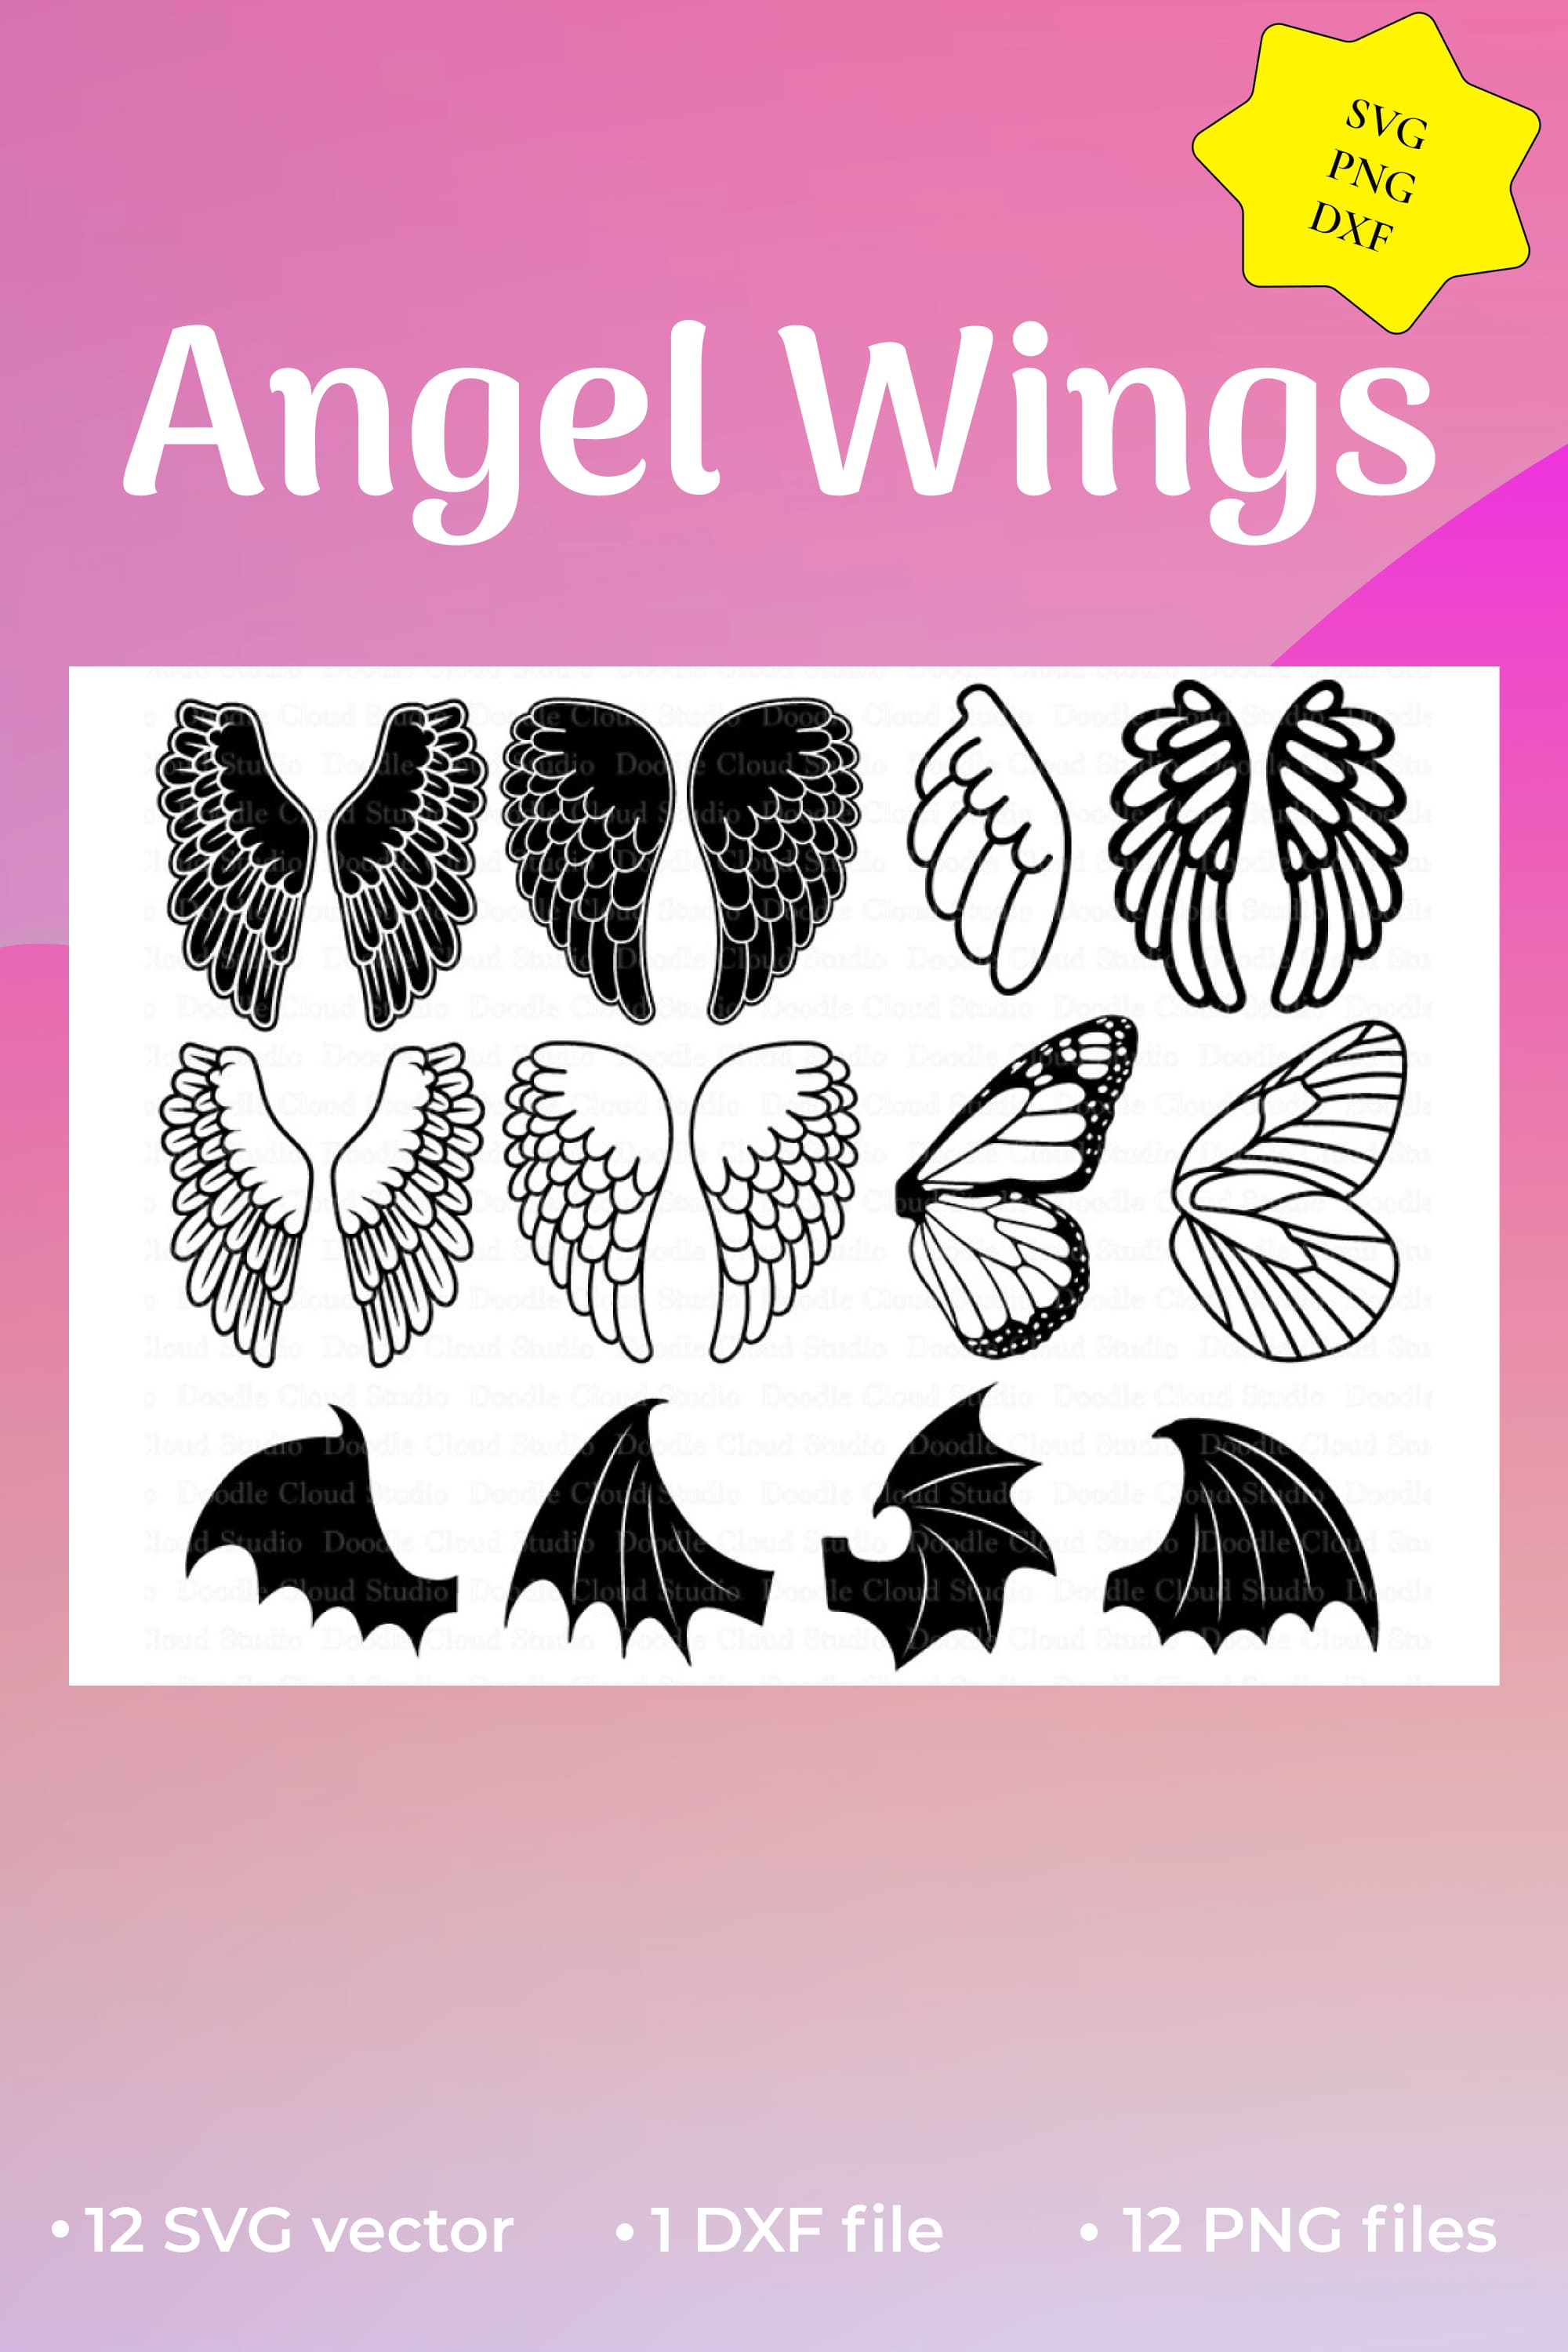 Minimalistic angel wings illustrations in black.